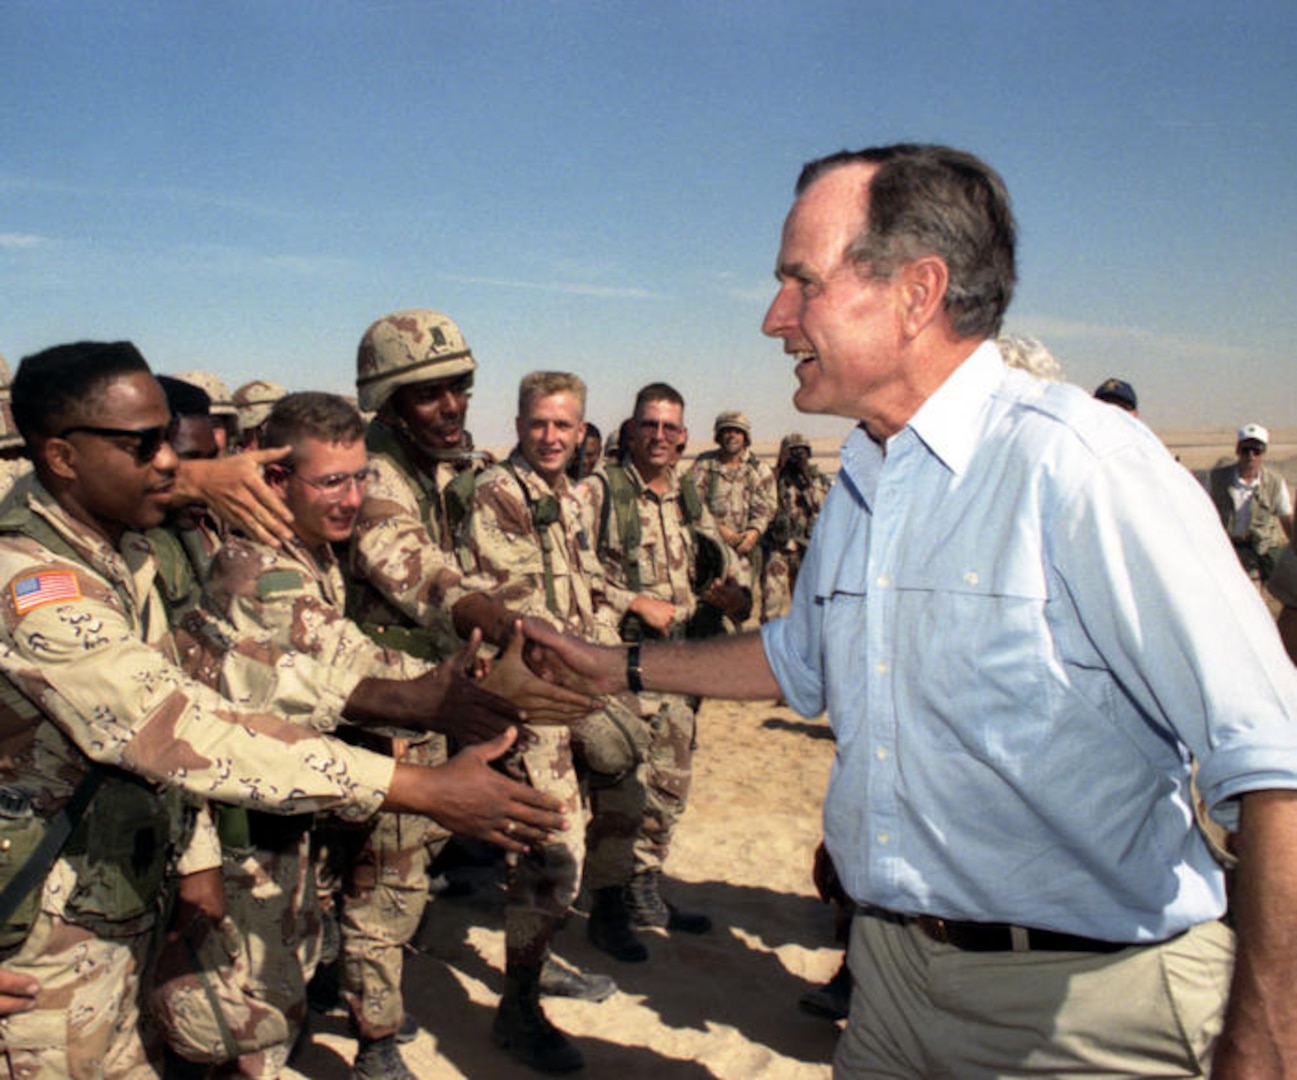 Bush s Legacy Includes Decisive Military Action gt U S Central Command 